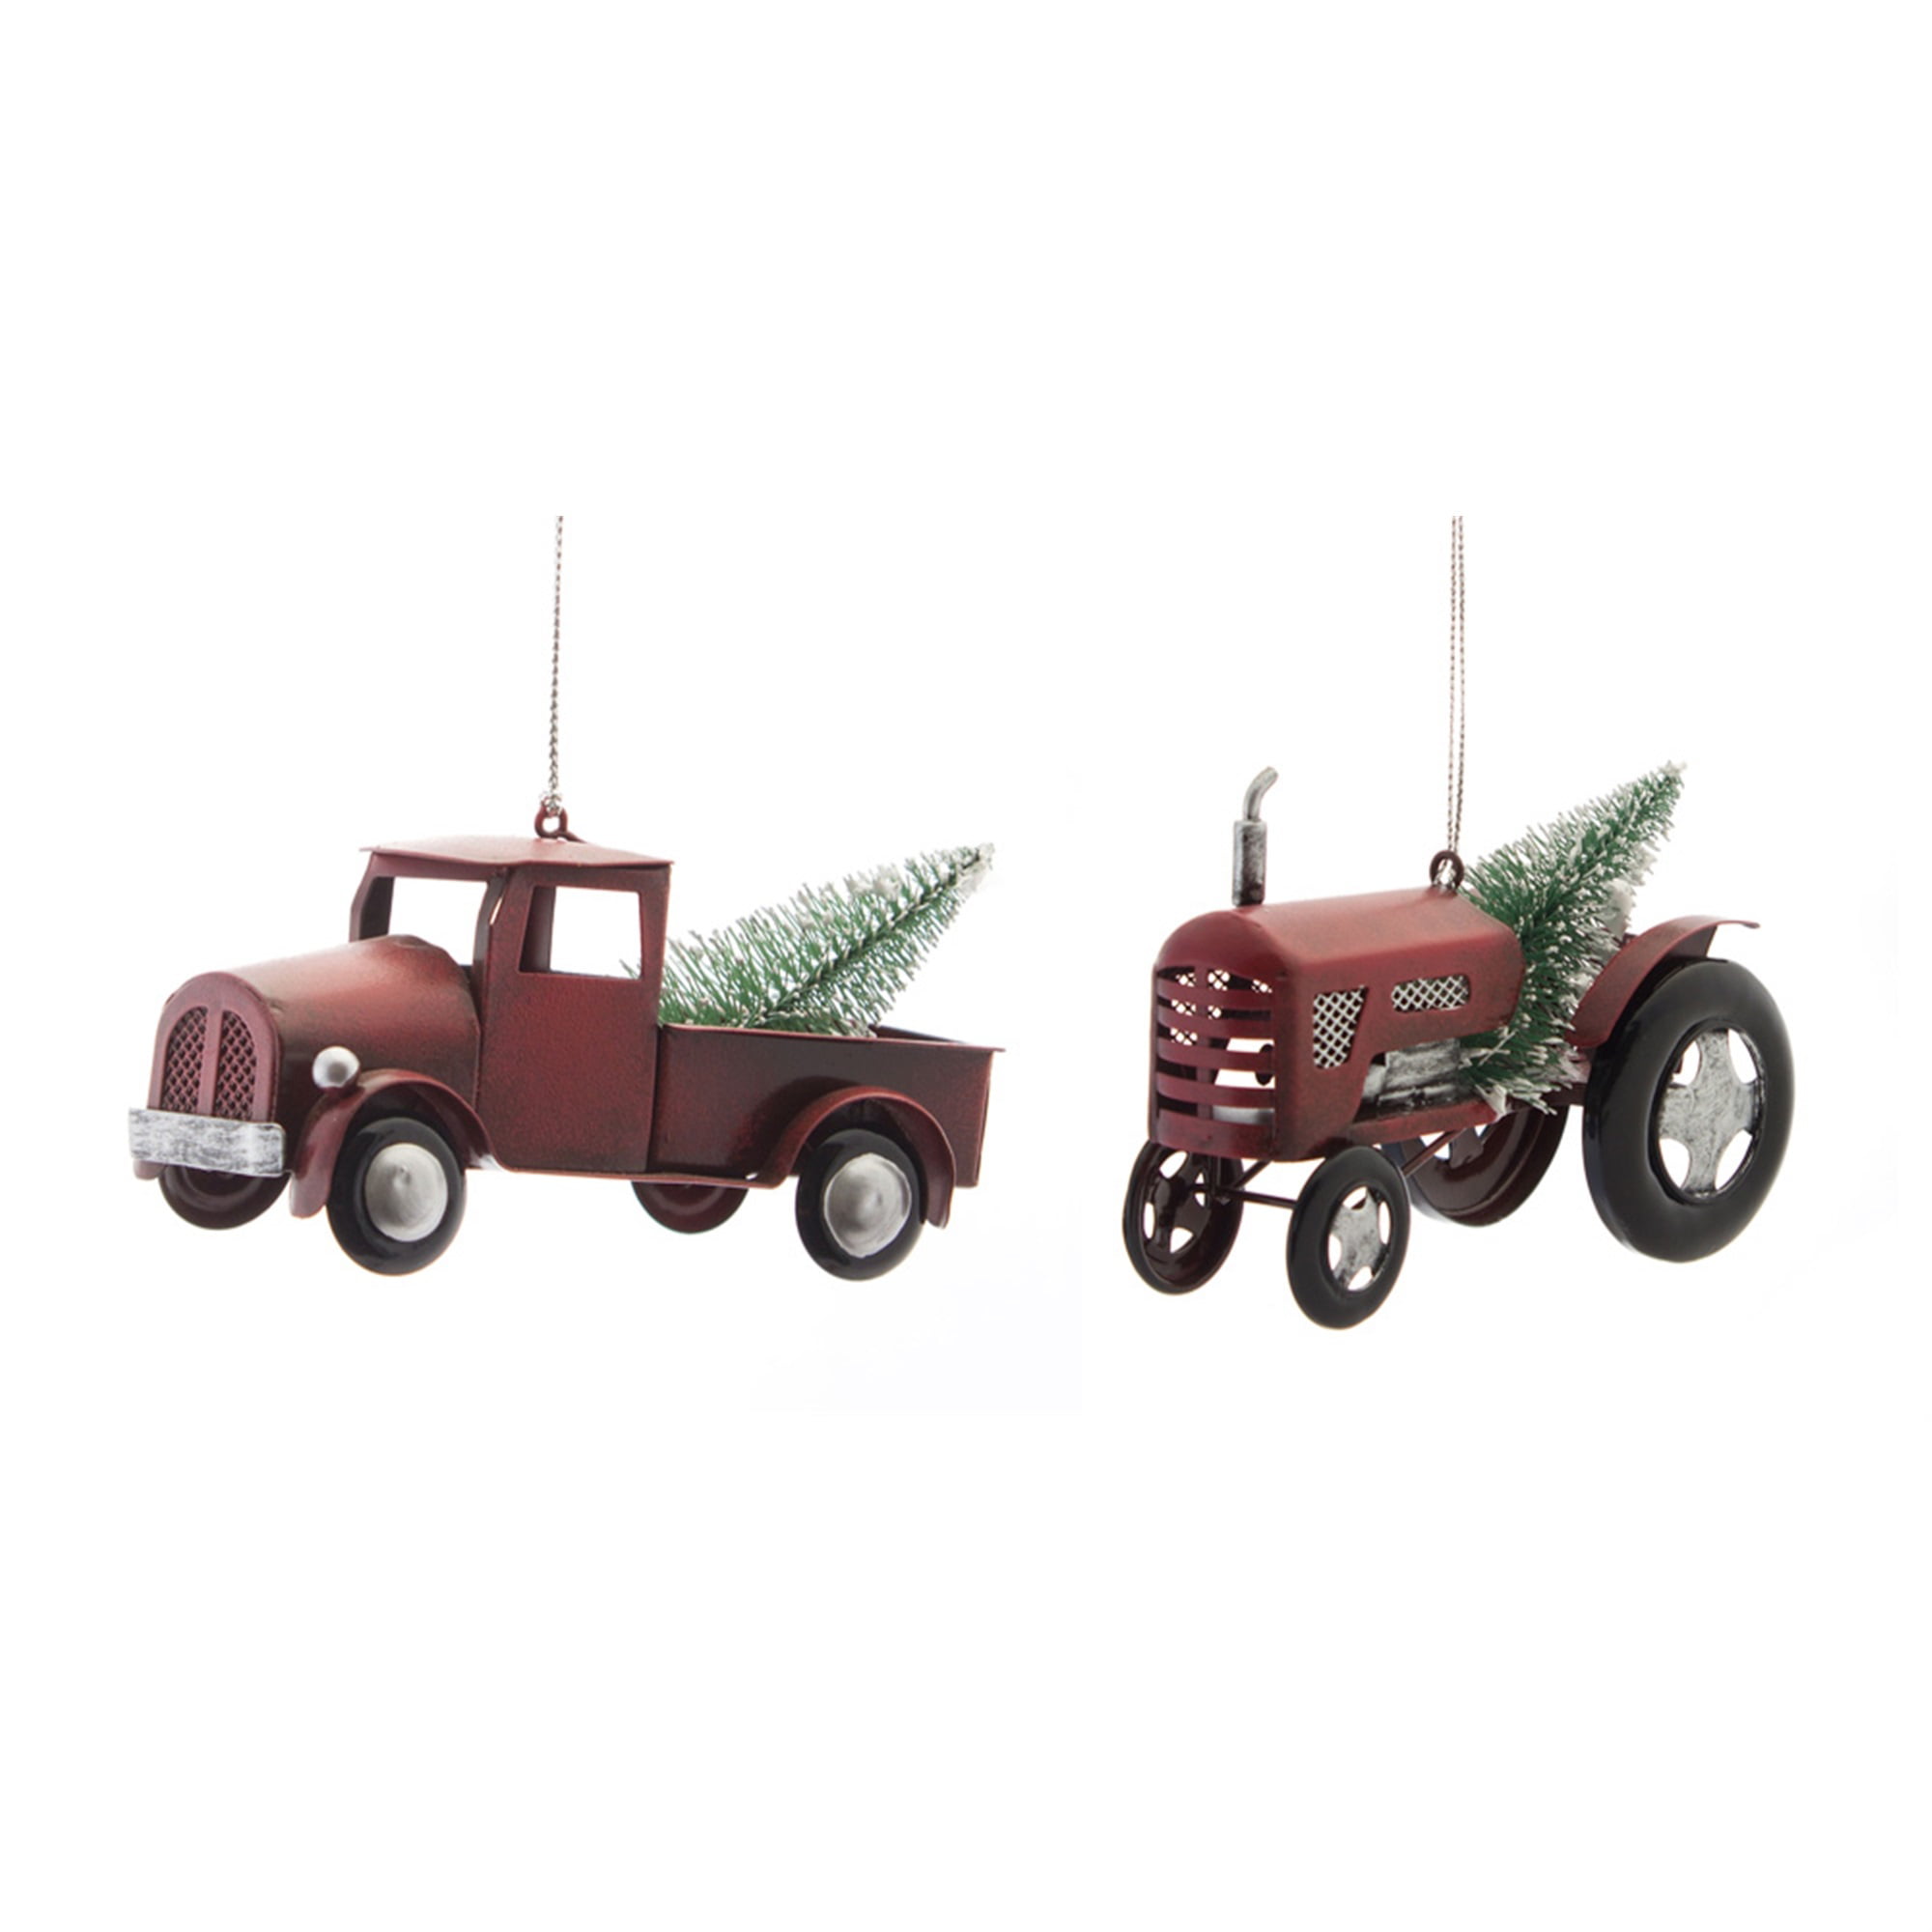 Truck and Tractor Ornament (Set of 6) 5"L, 4.75"L Metal